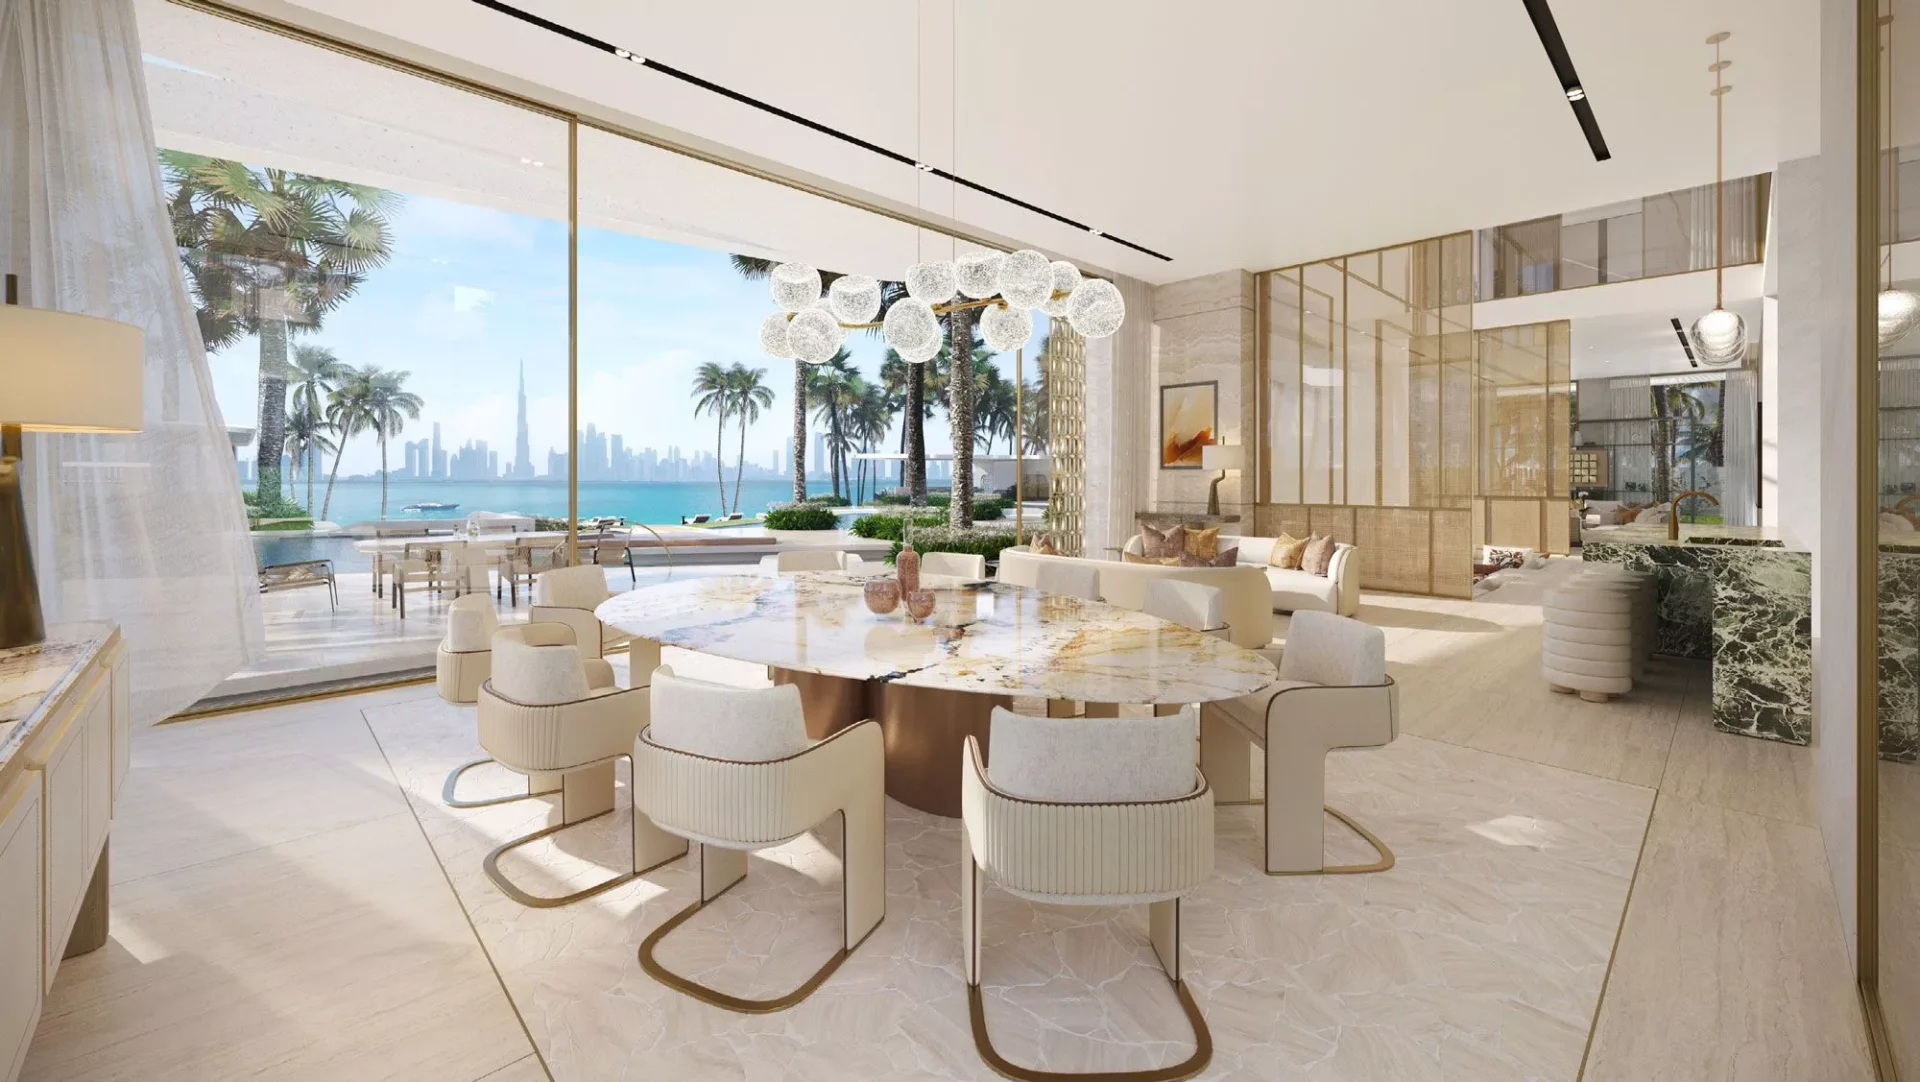 Amali Islands Dubai - Amali Villa von Amali Properties17.jpg